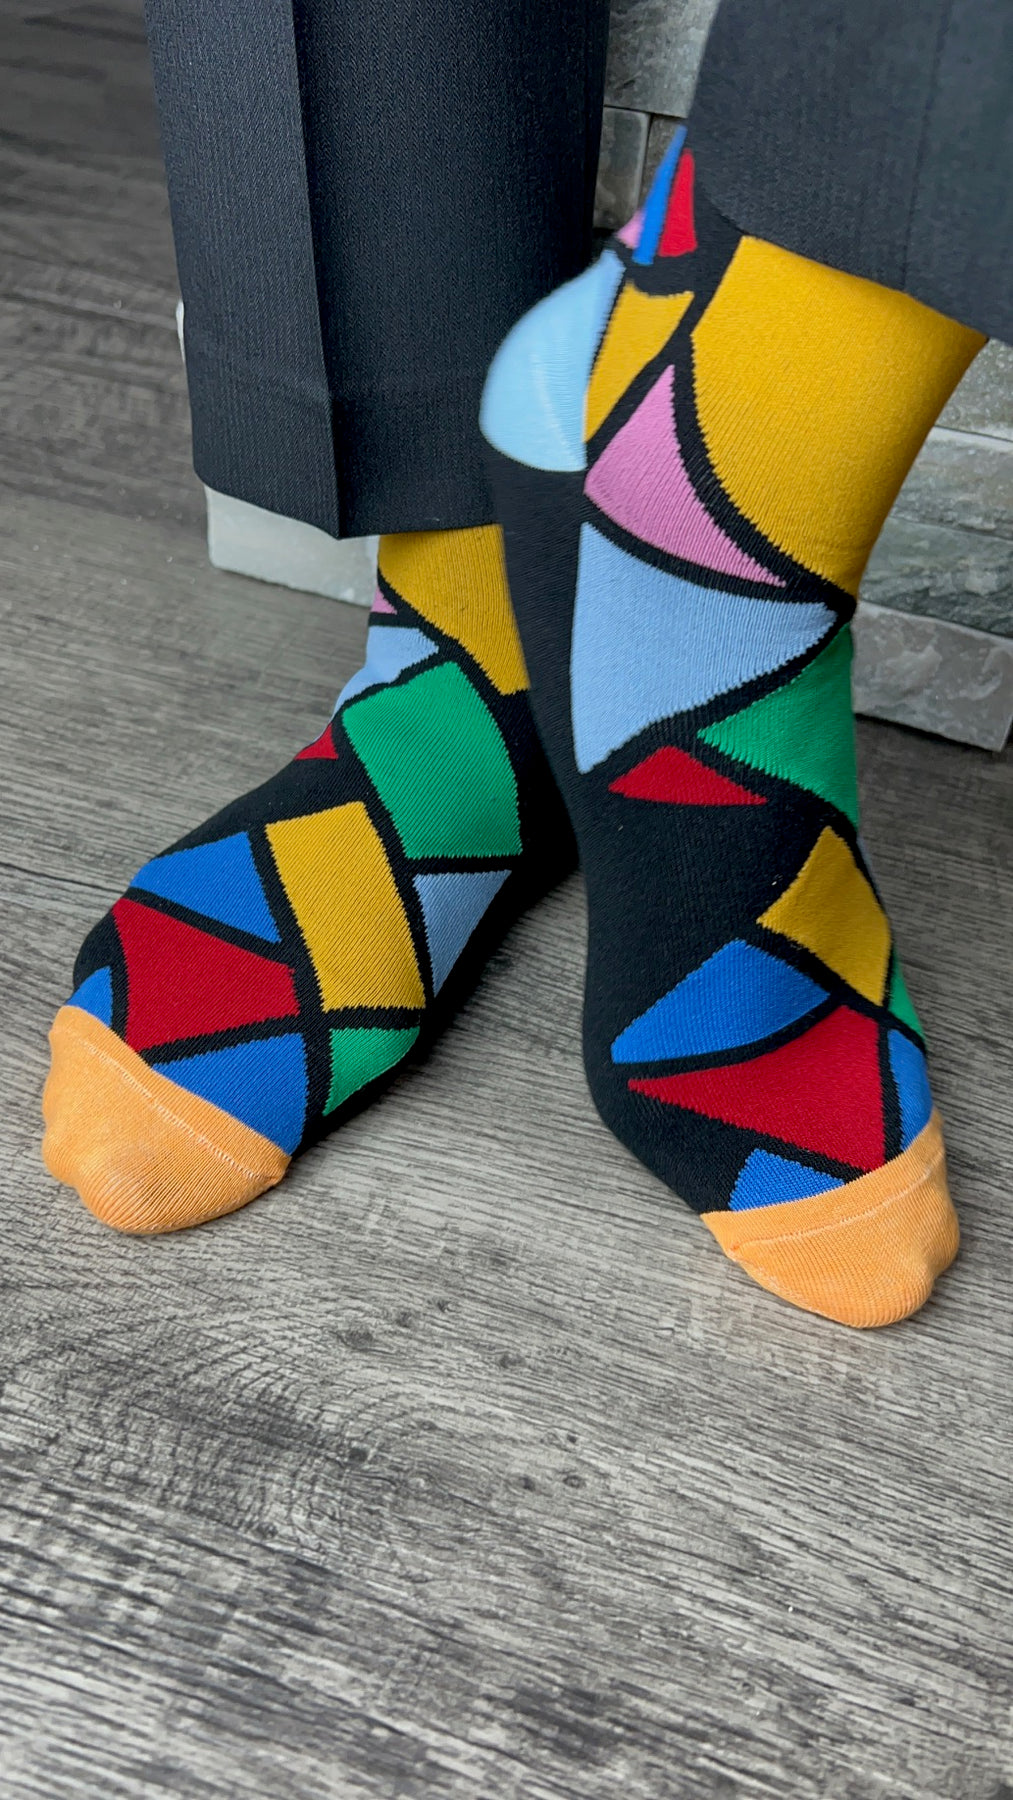 Puzzle Socks for Men  Novelty Cube Game Socks - Cute But Crazy Socks